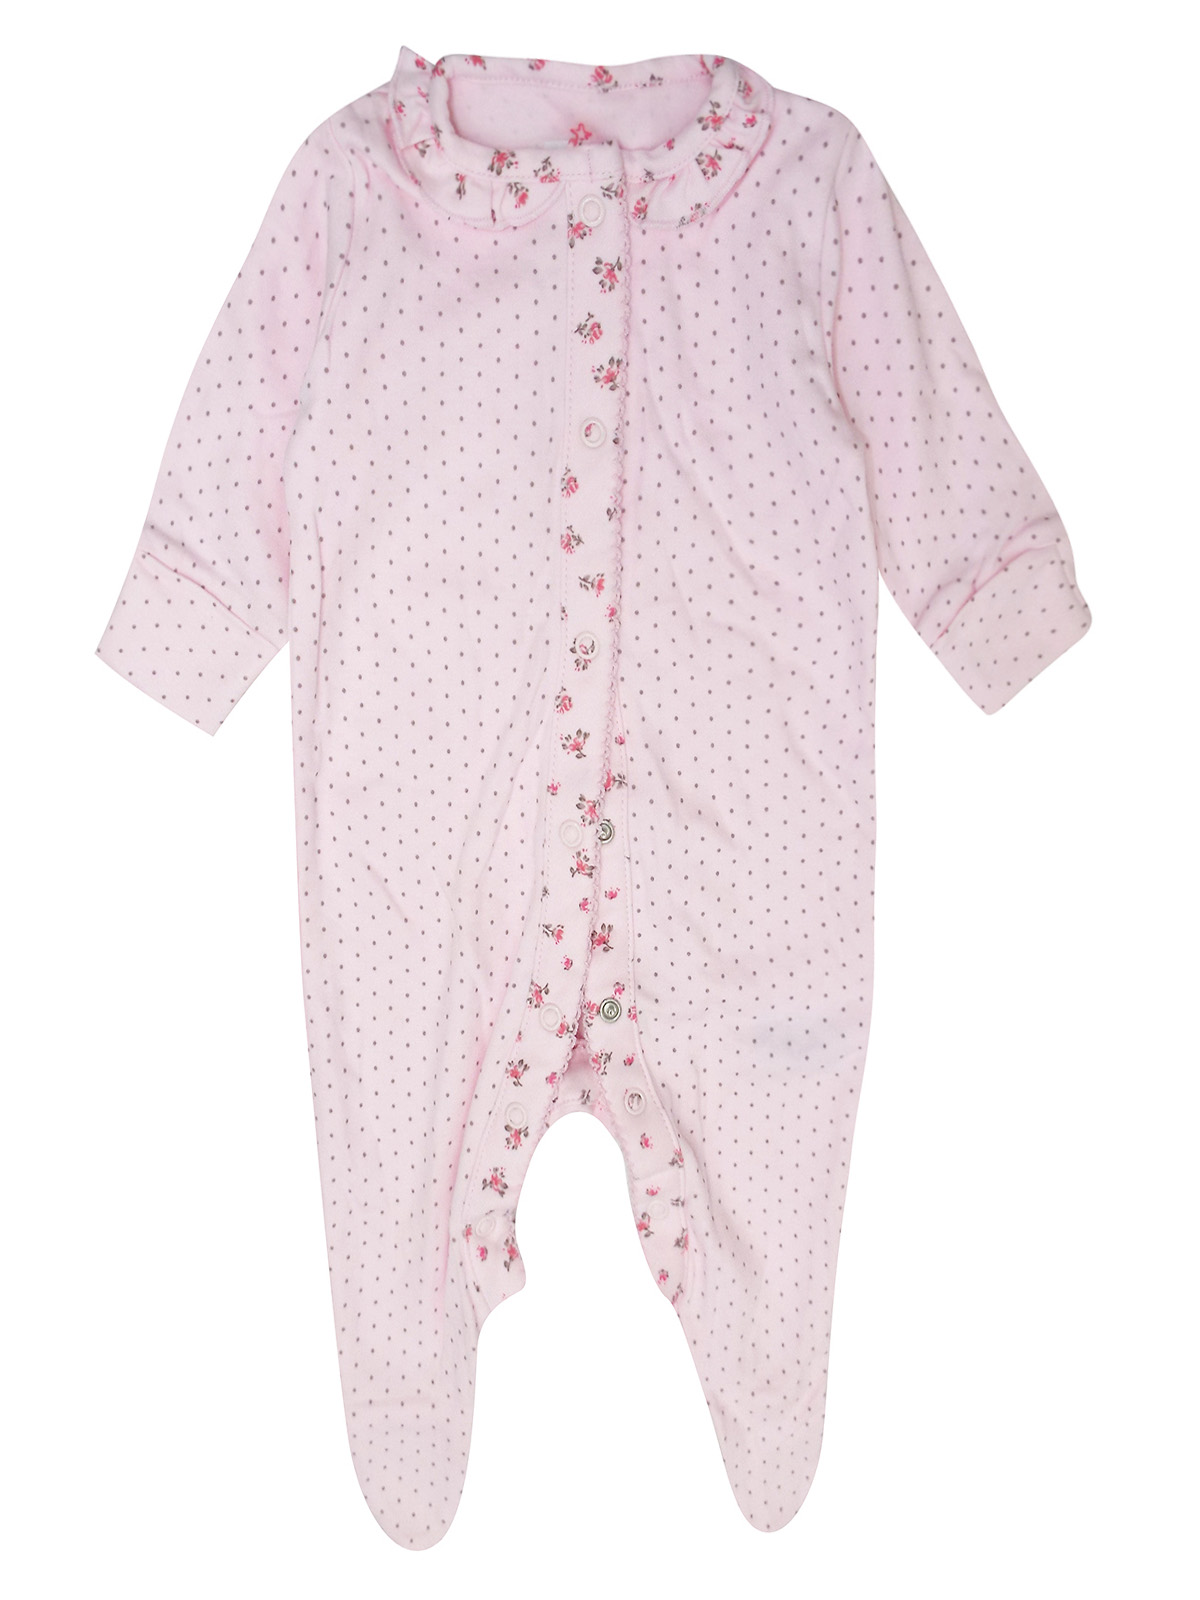 N3XT PINK Baby Girls Polka Dot Frill Trim Sleepsuit - Size 3M